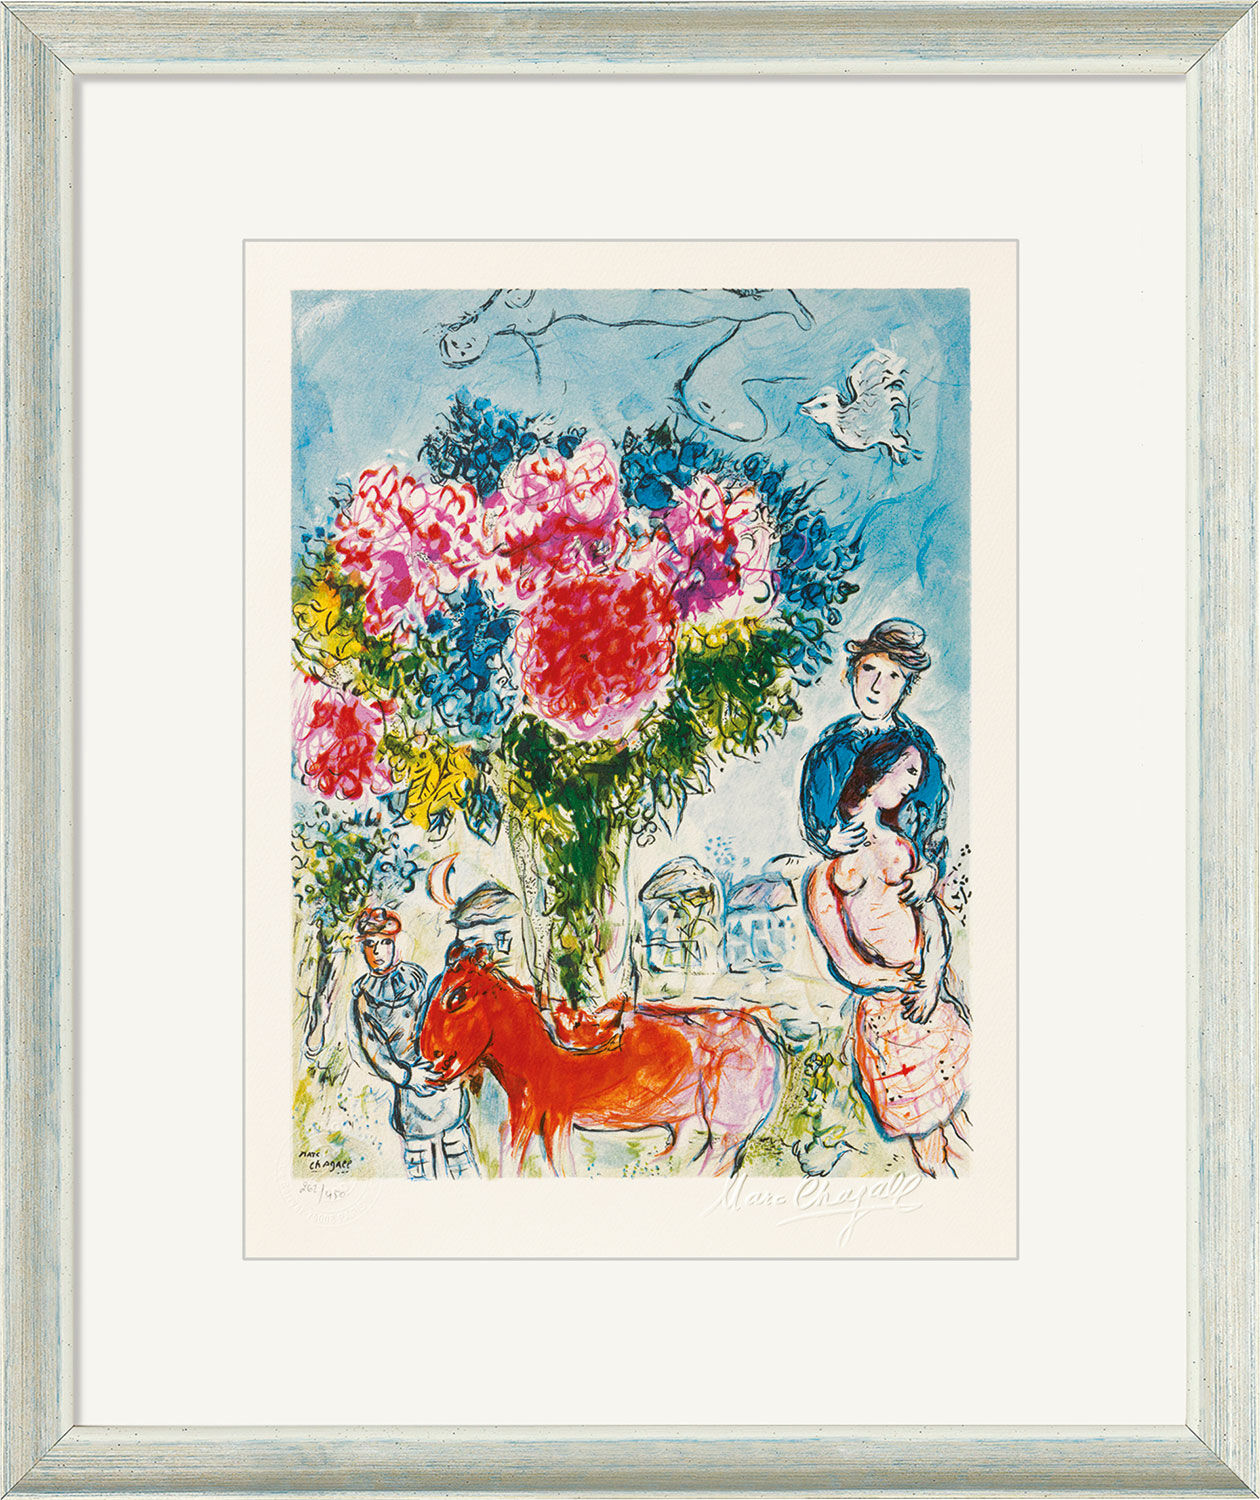 Billede "Personnages fantastiques" (1974), indrammet von Marc Chagall